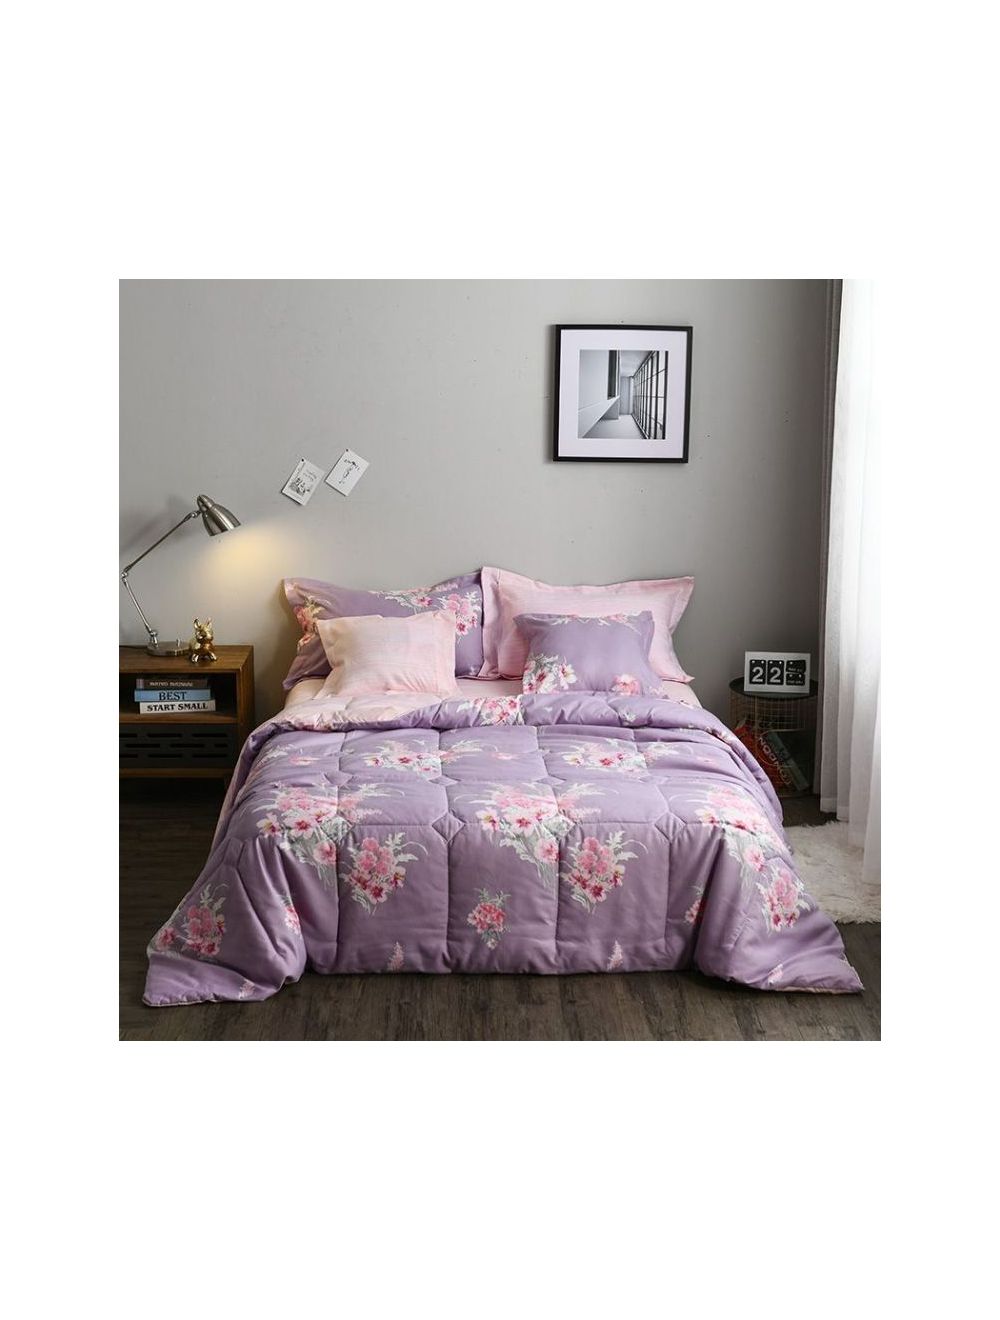 Rishahome 6 Piece Comforter Set (1 comforter+1 fitted sheet+ 2 Large pillow cases+2 medium pillow cases) Microfibre Fleur Delis King-FDKMH/06/31